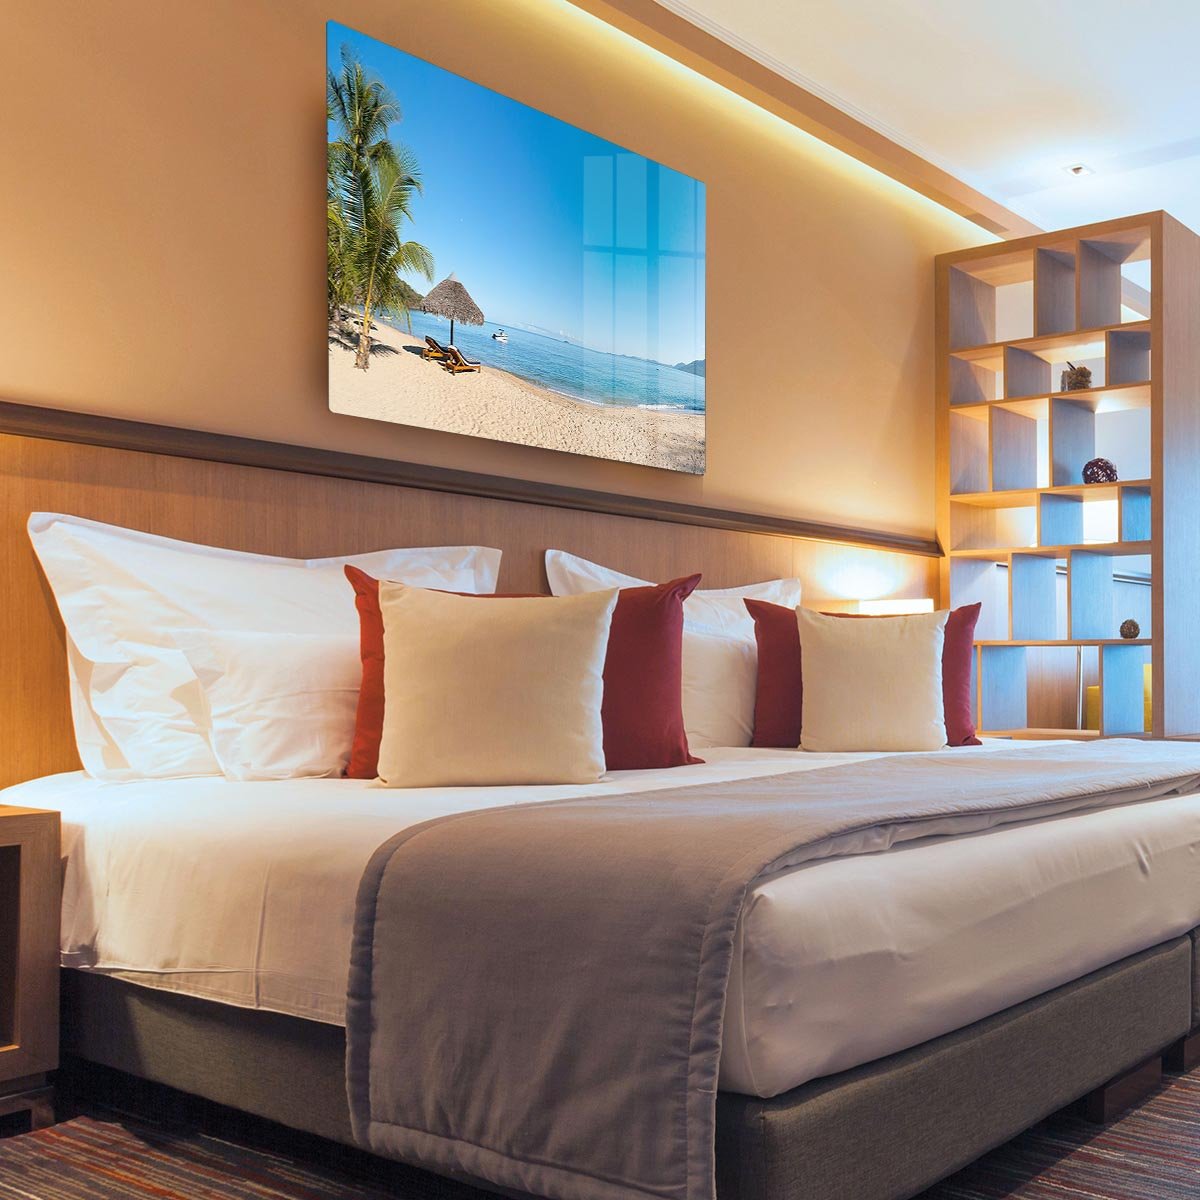 Tropical beach panorama with deckchairs HD Metal Print - Canvas Art Rocks - 3